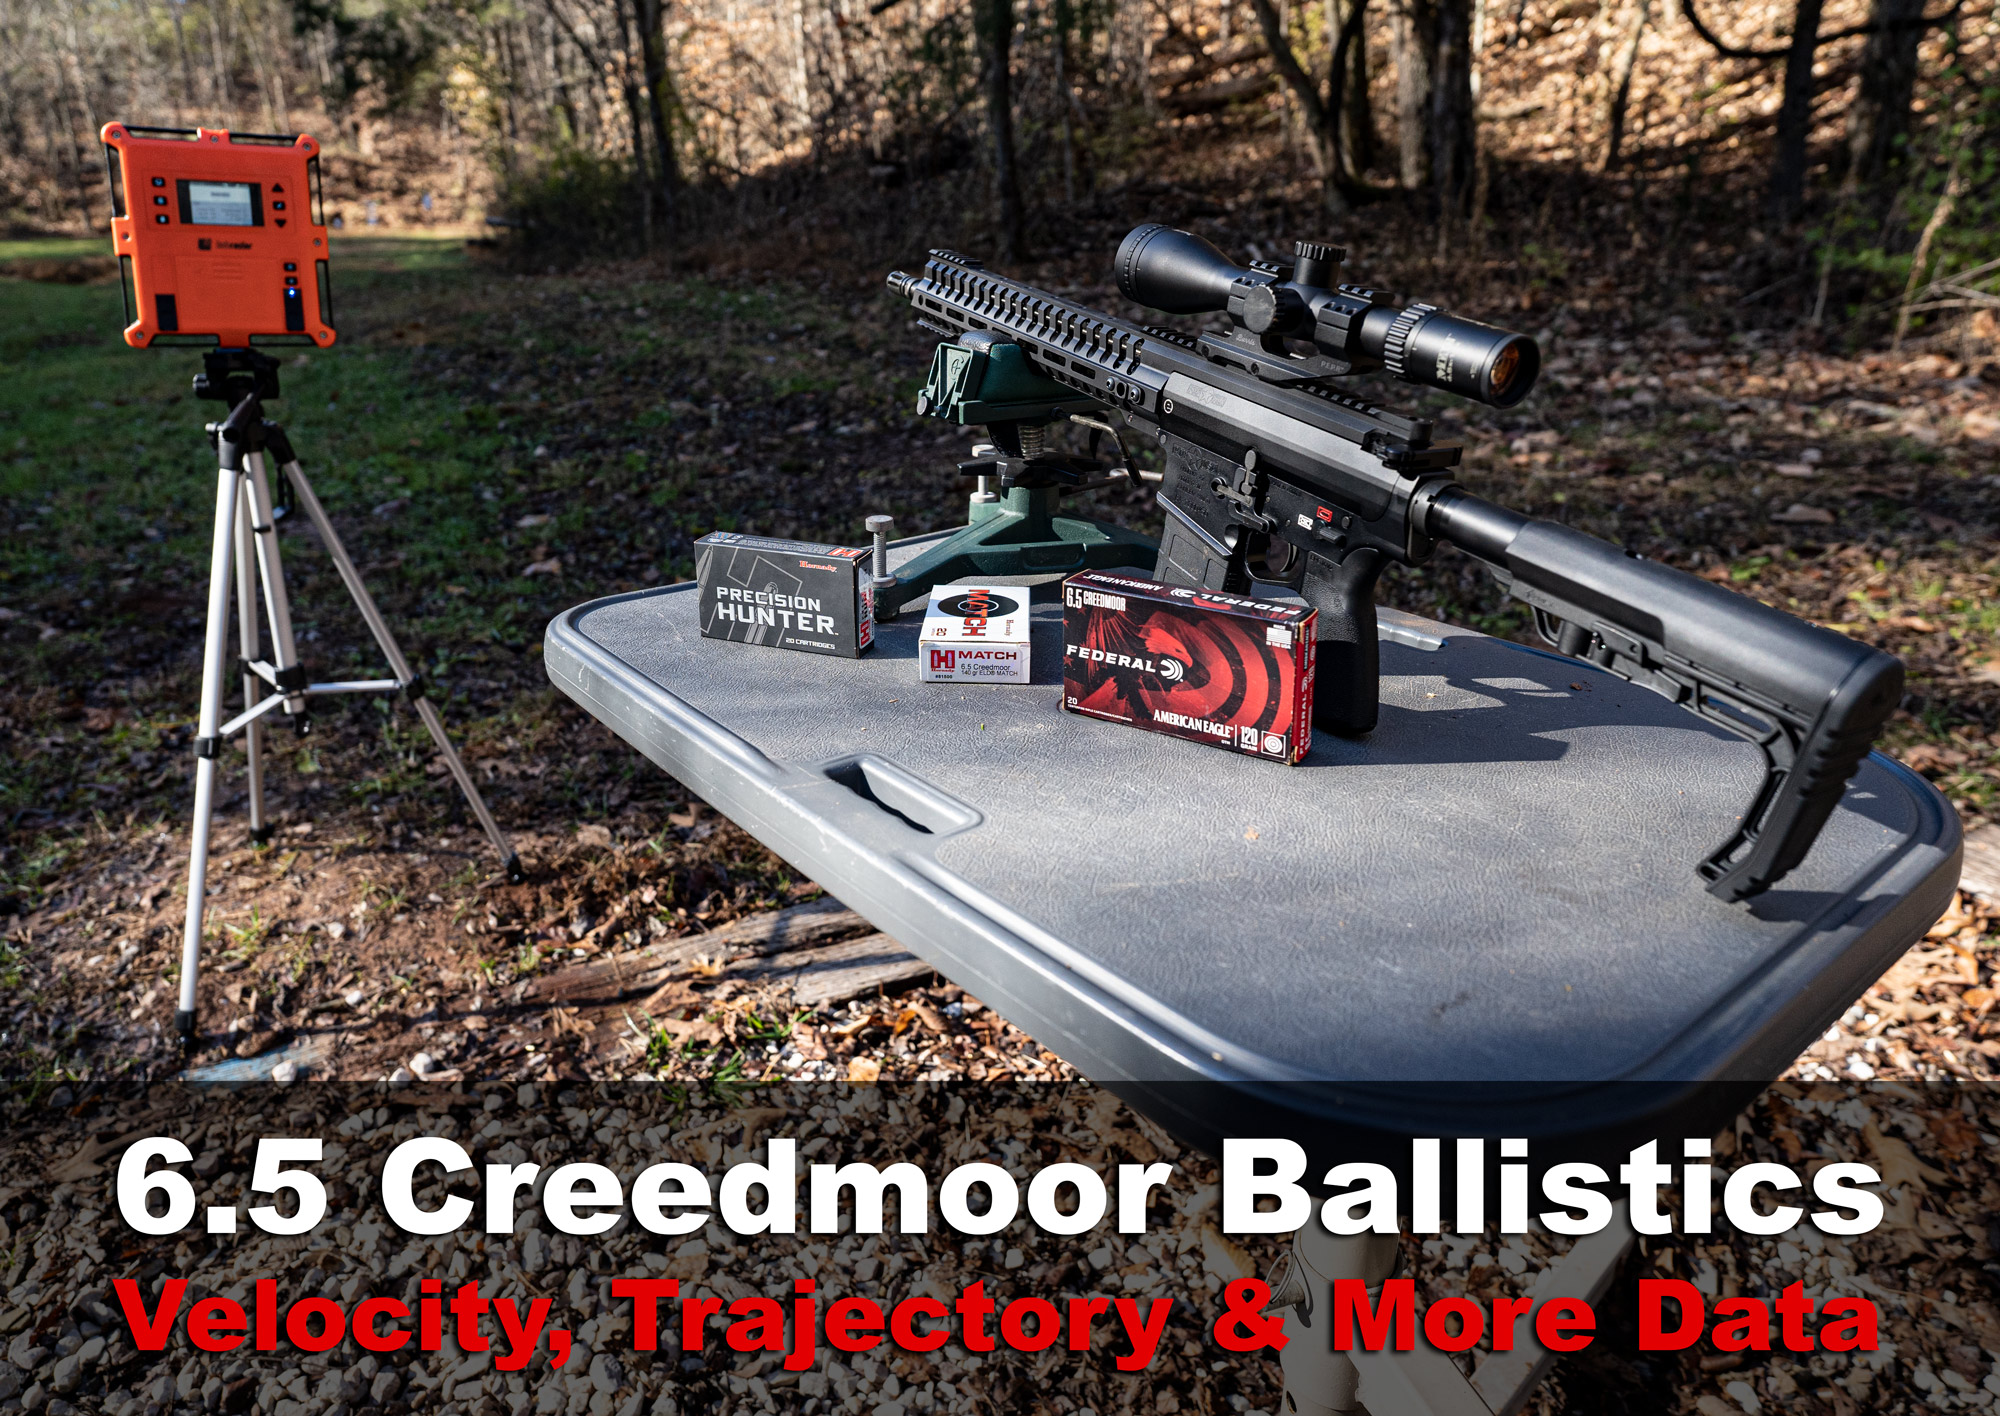 6.5 Creedmoor ballistics testing at a shooting range with rifle and chronograph